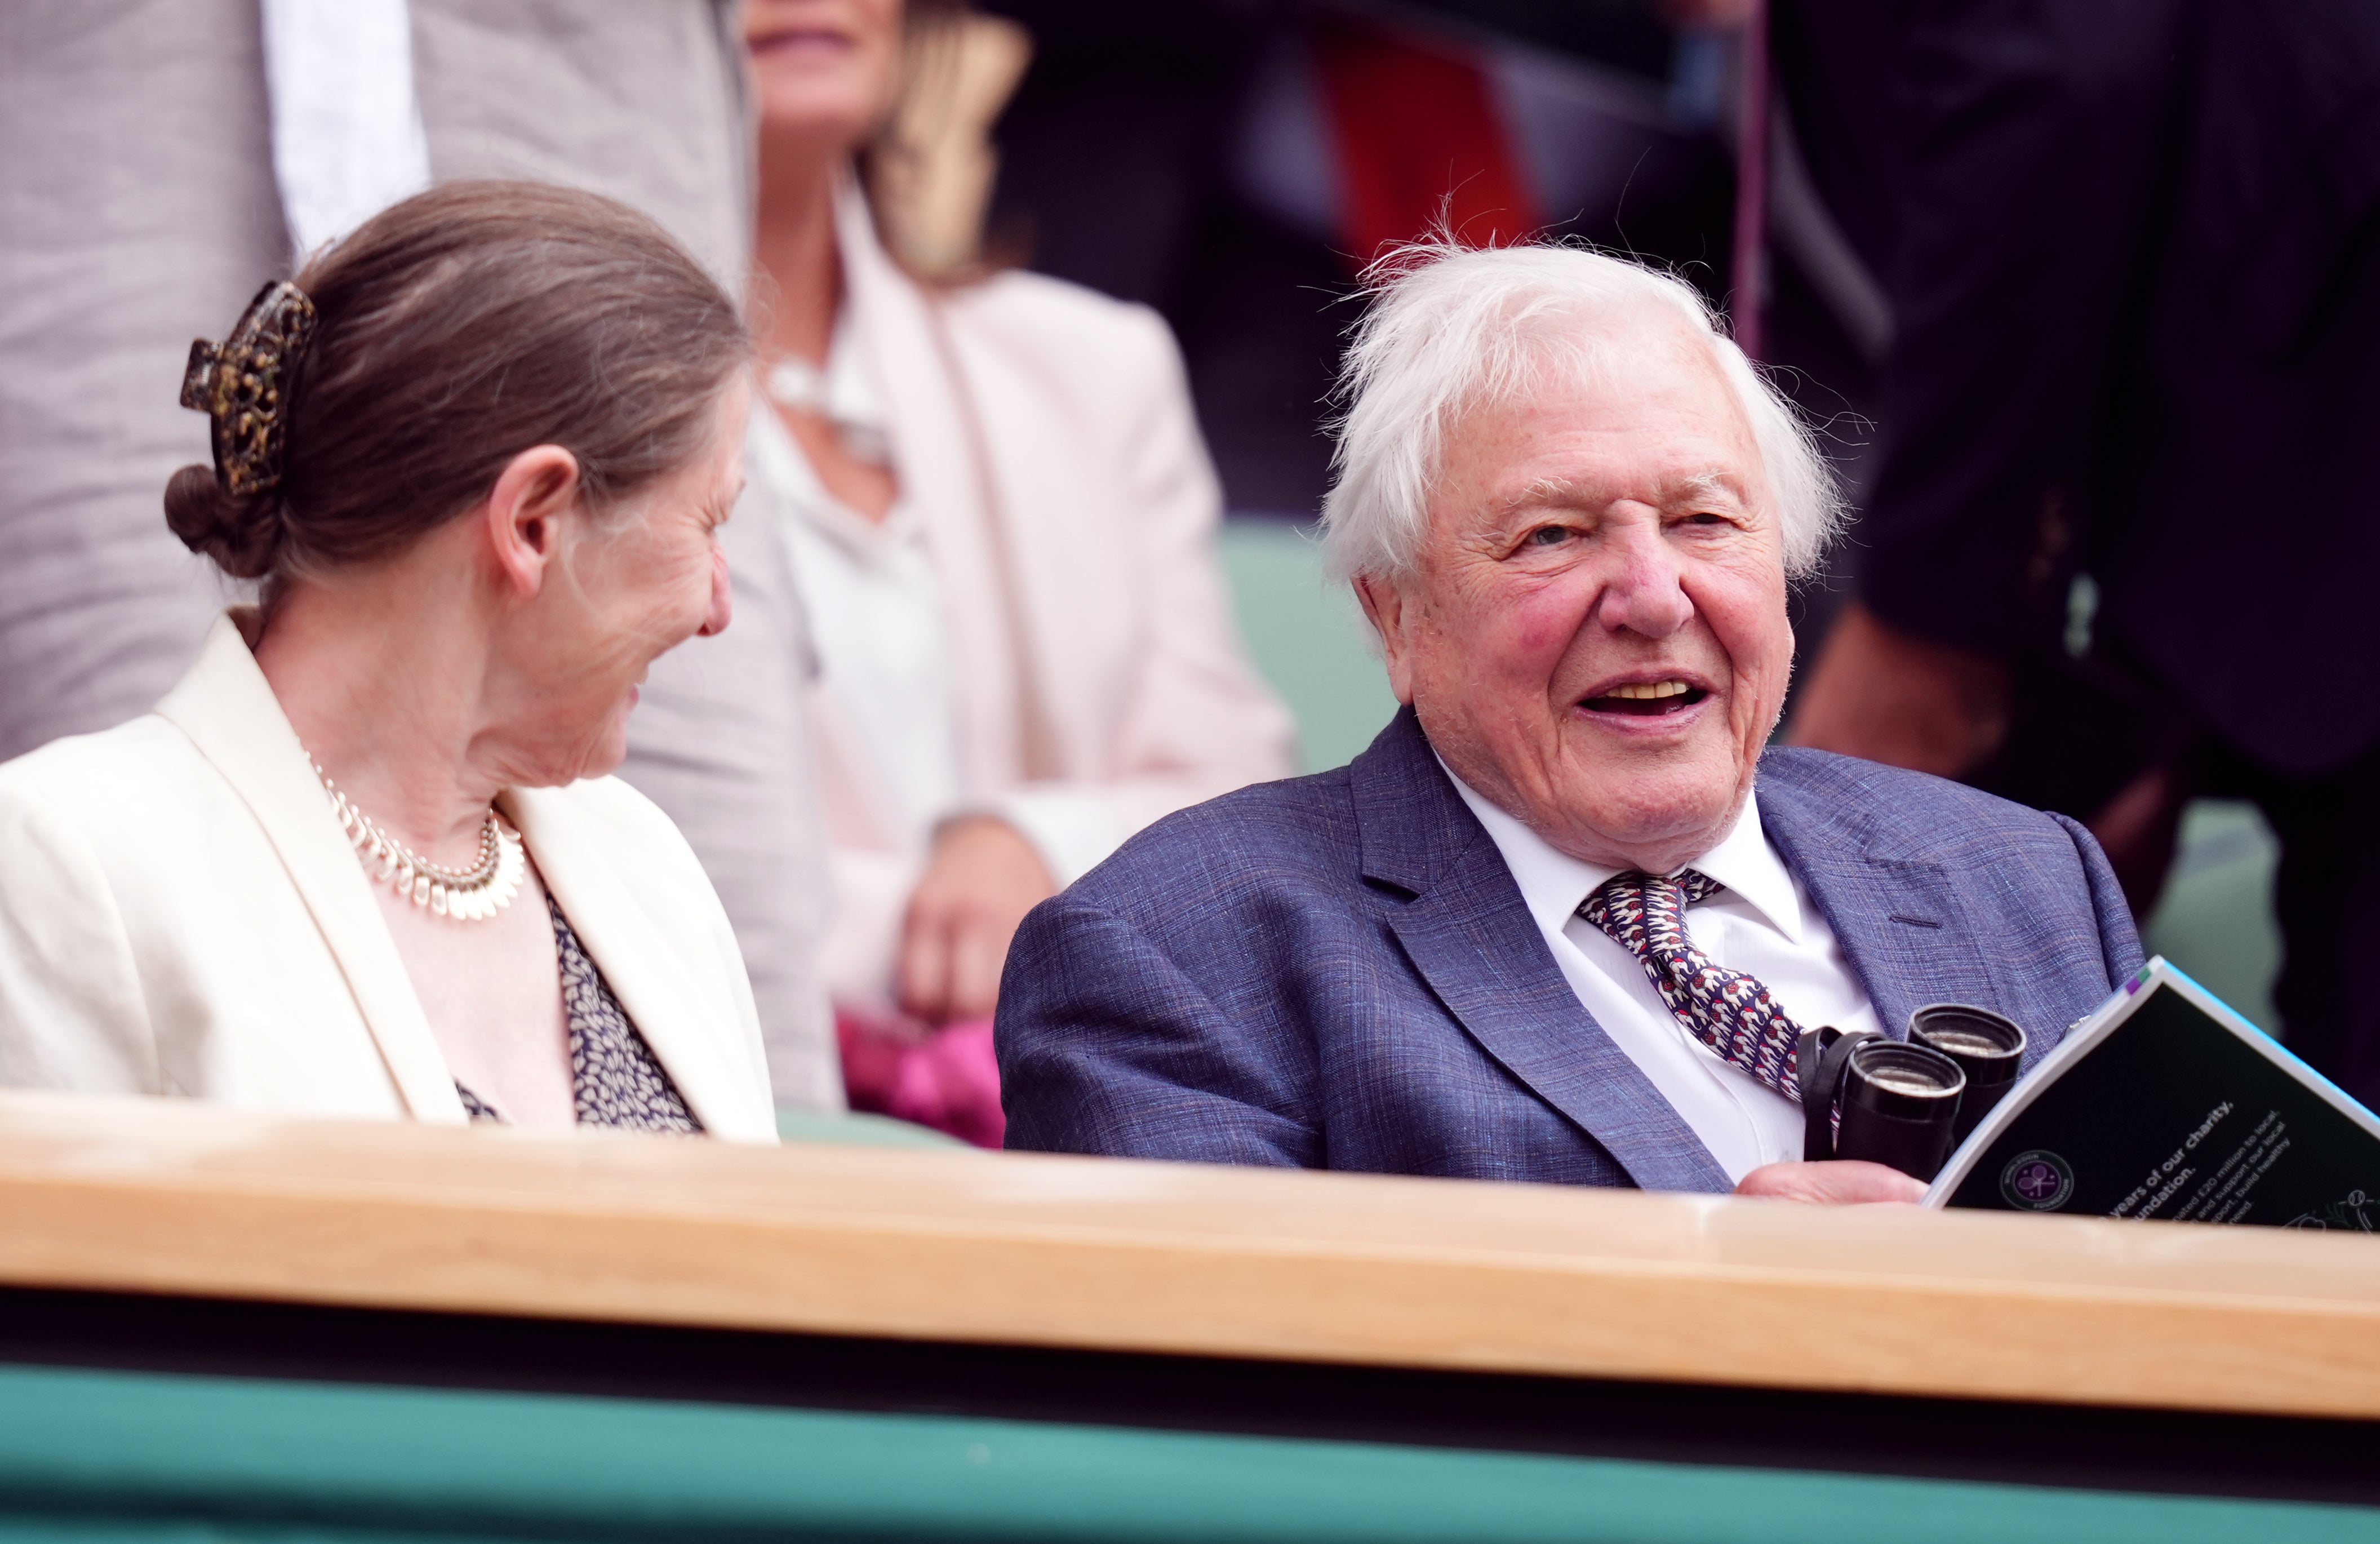 Sir David Attenborough and his daughter Susan in the royal box on Centre Court (John Walton/PA)